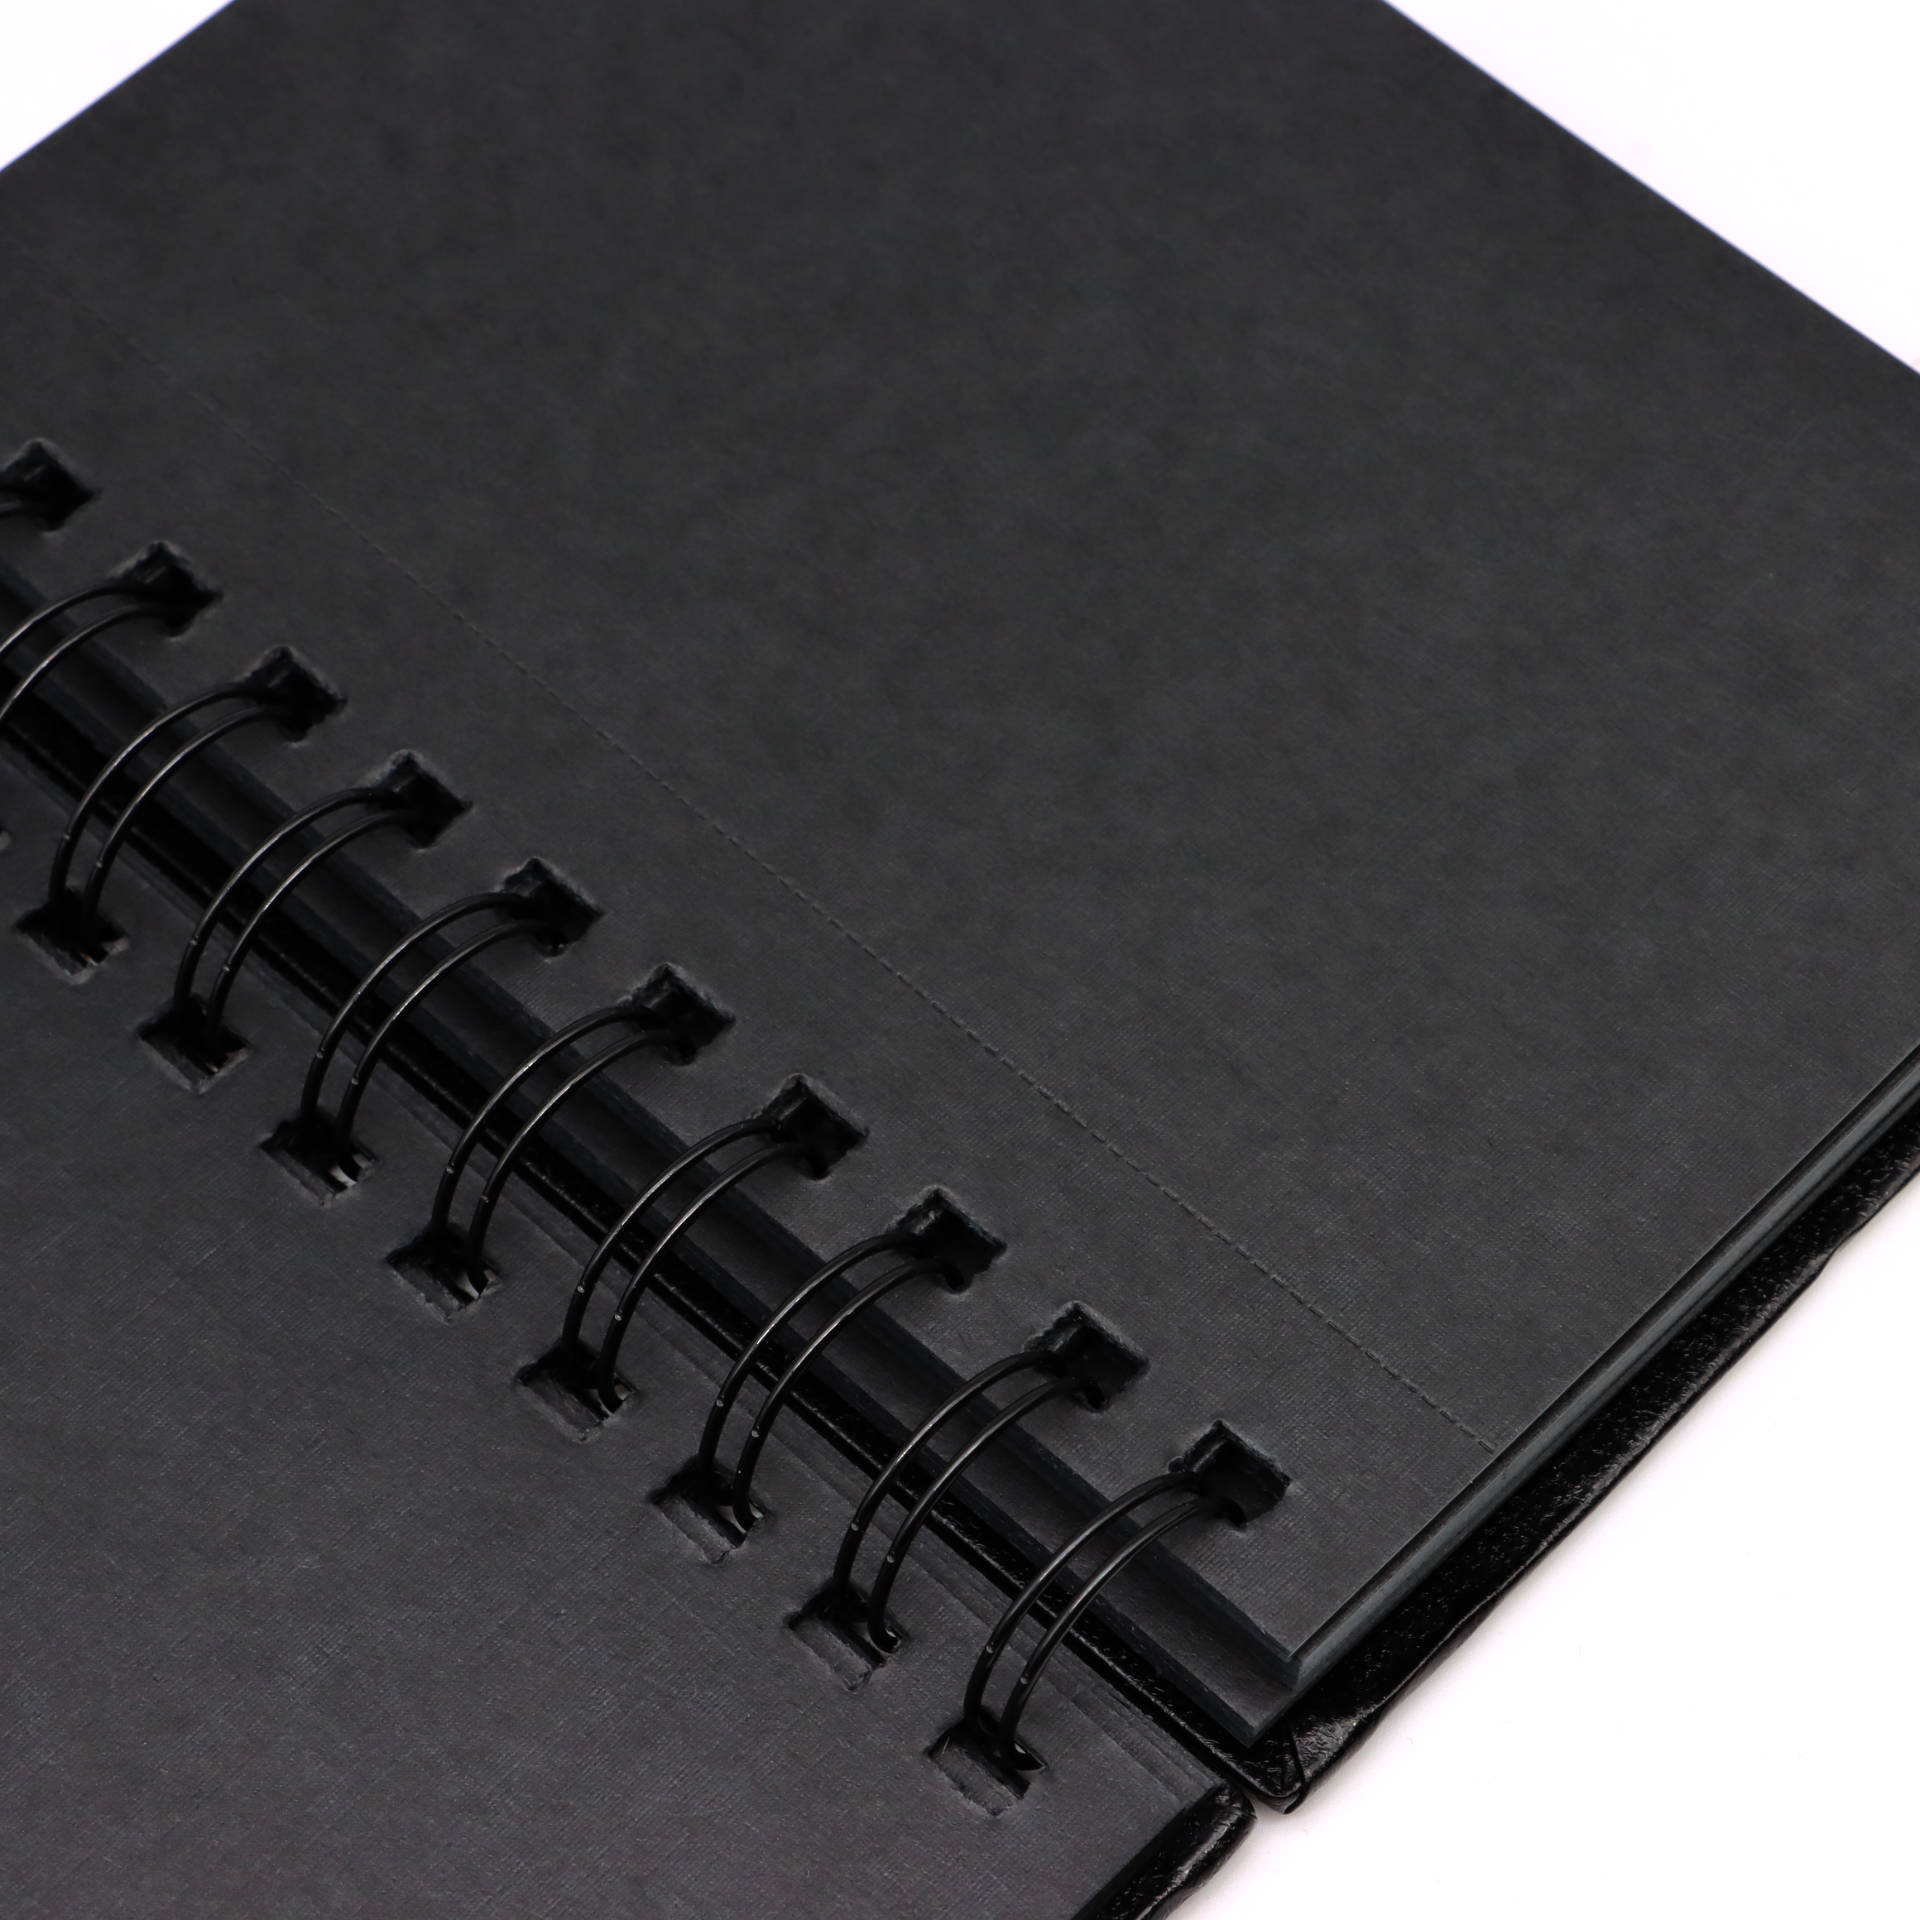 Premium Black Sketchbook, A5